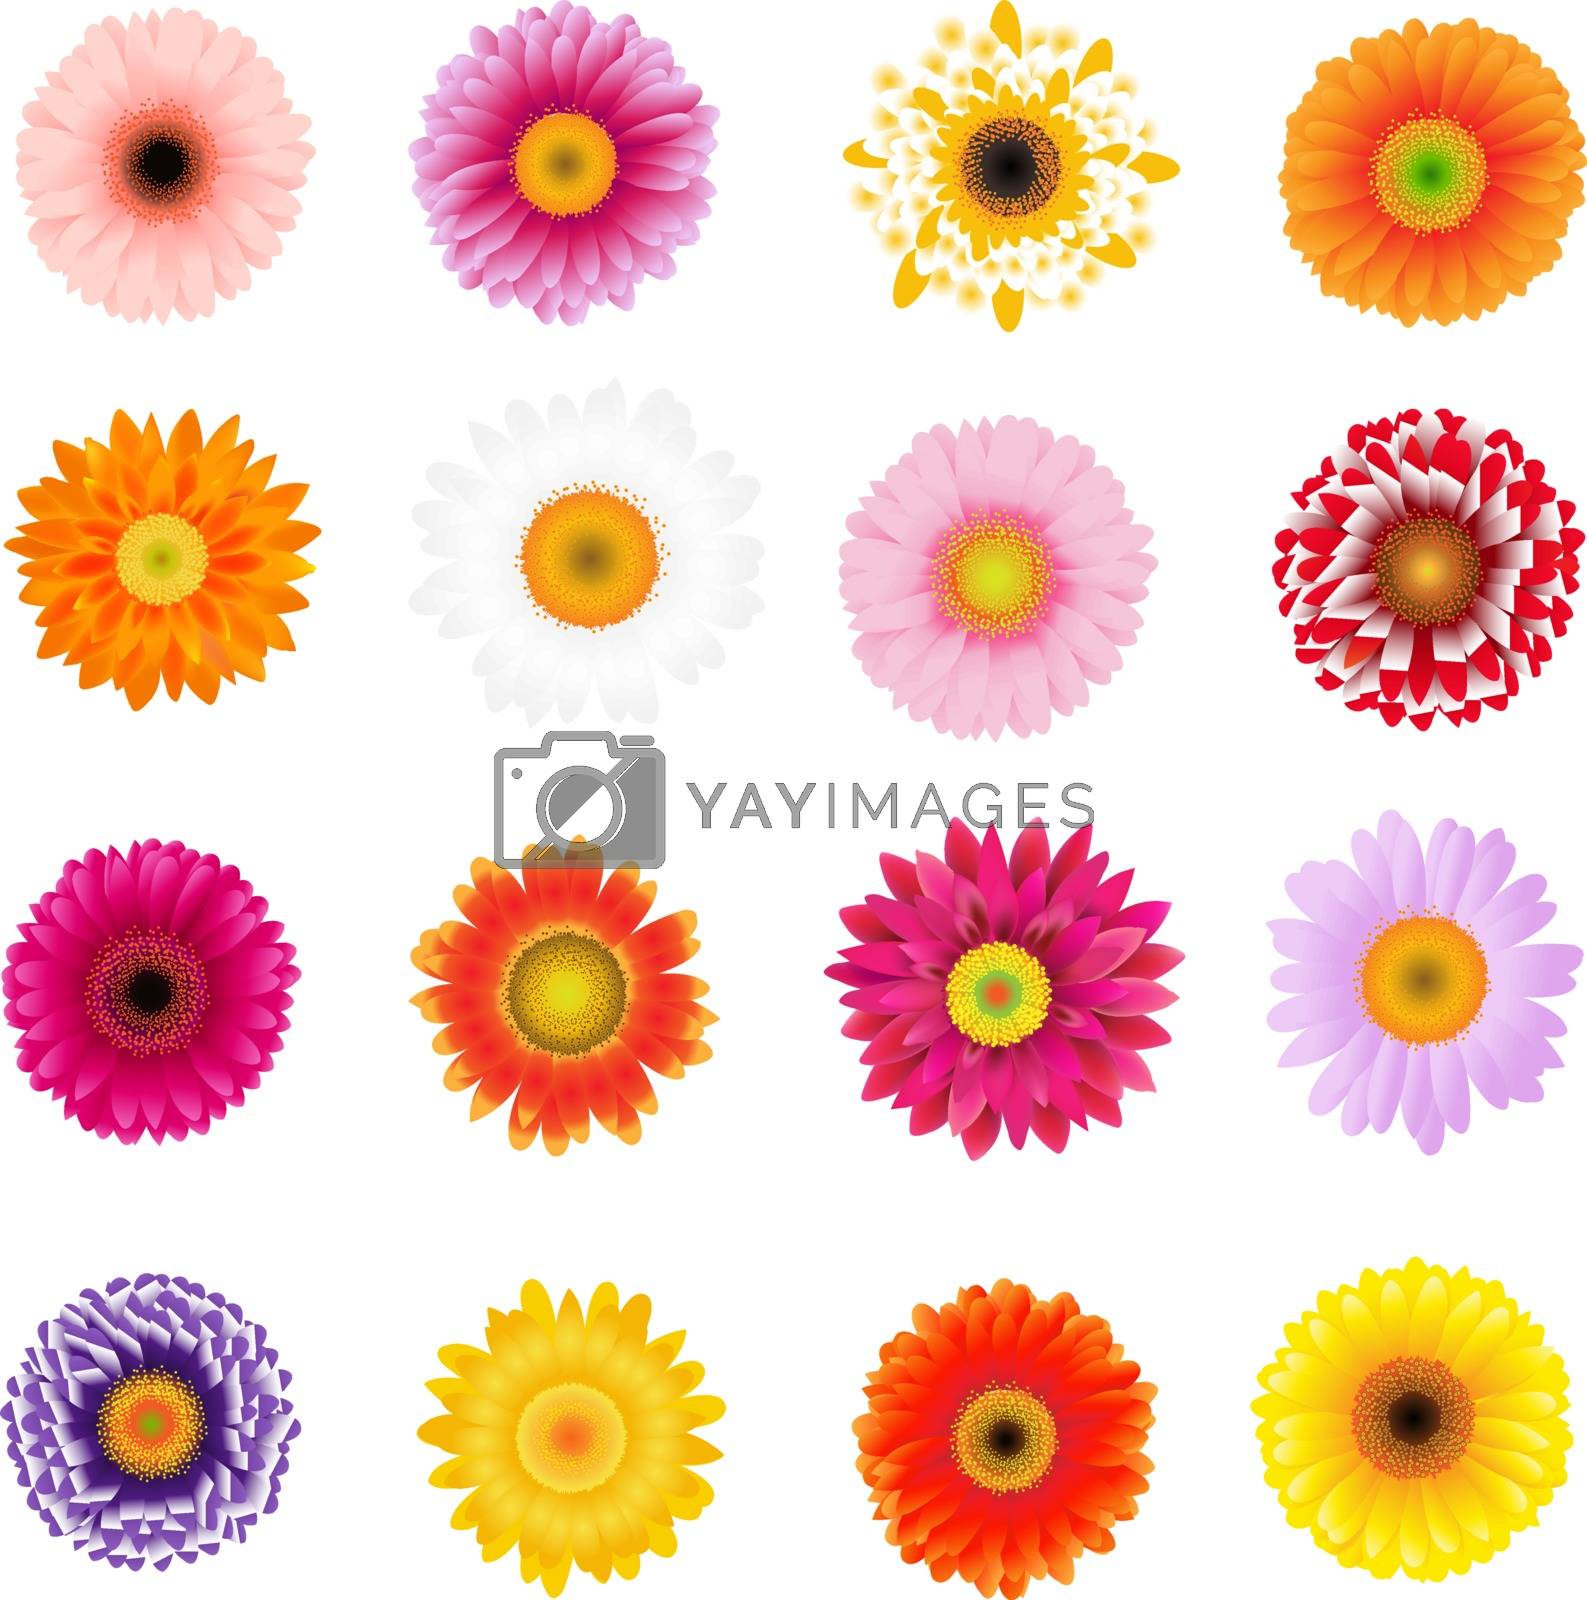 Royalty free image of Big Colorful Gerbers Set by adamson